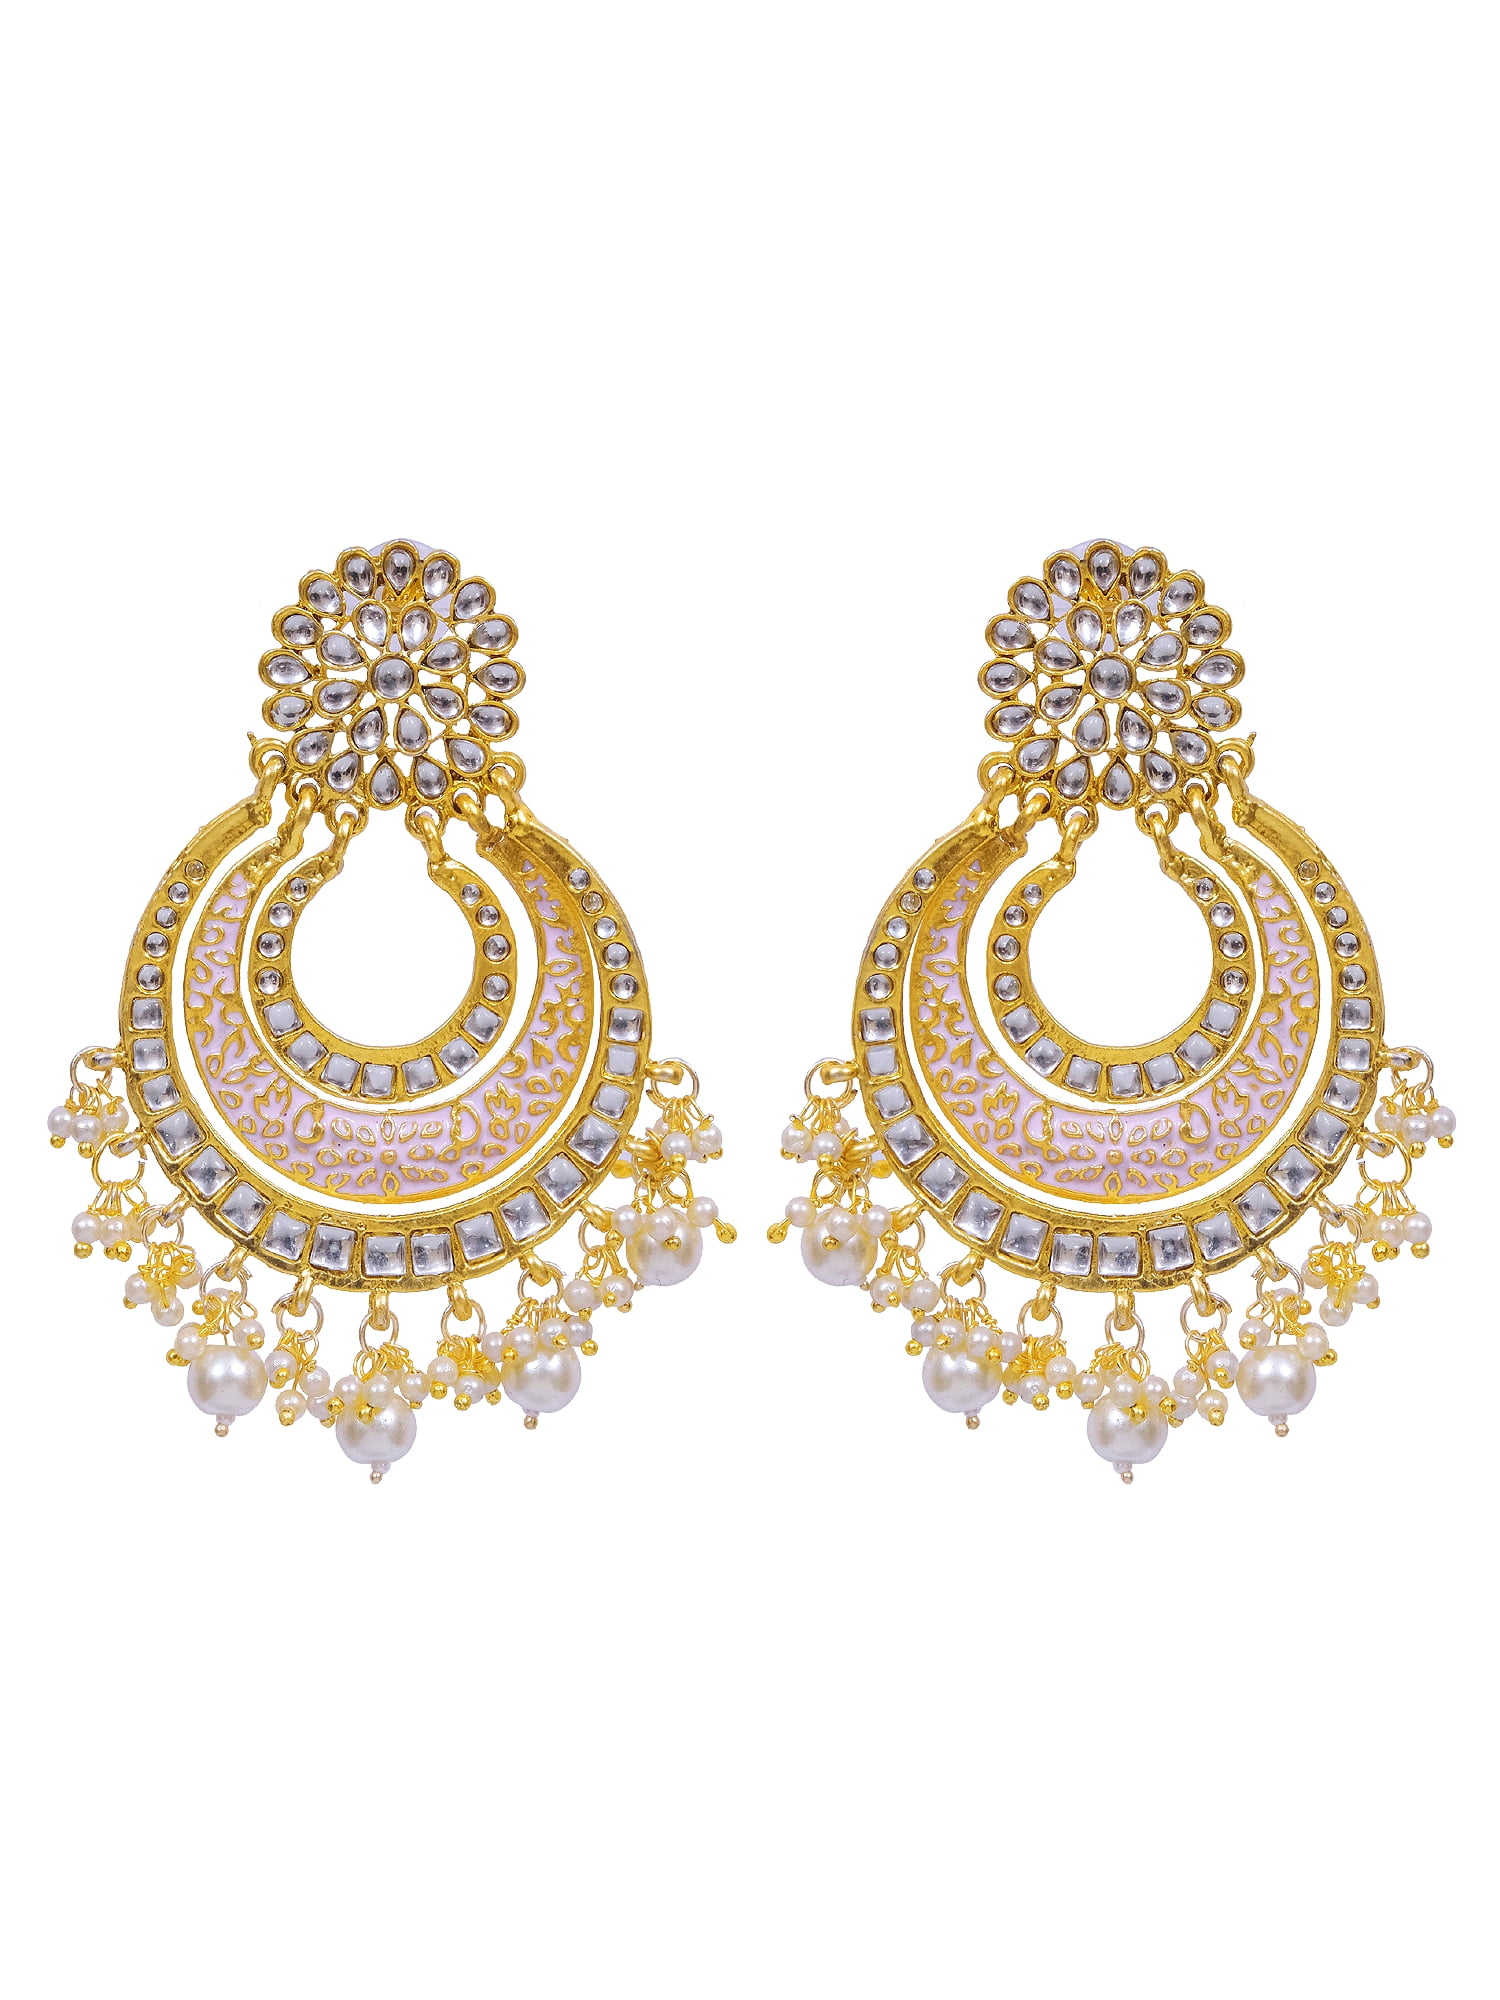 Amazon.com: Crunchy Fashion Bollywood Style Traditional Indian Jewelry  Green Meenakari Jhumka Jhumki Earrings for Women